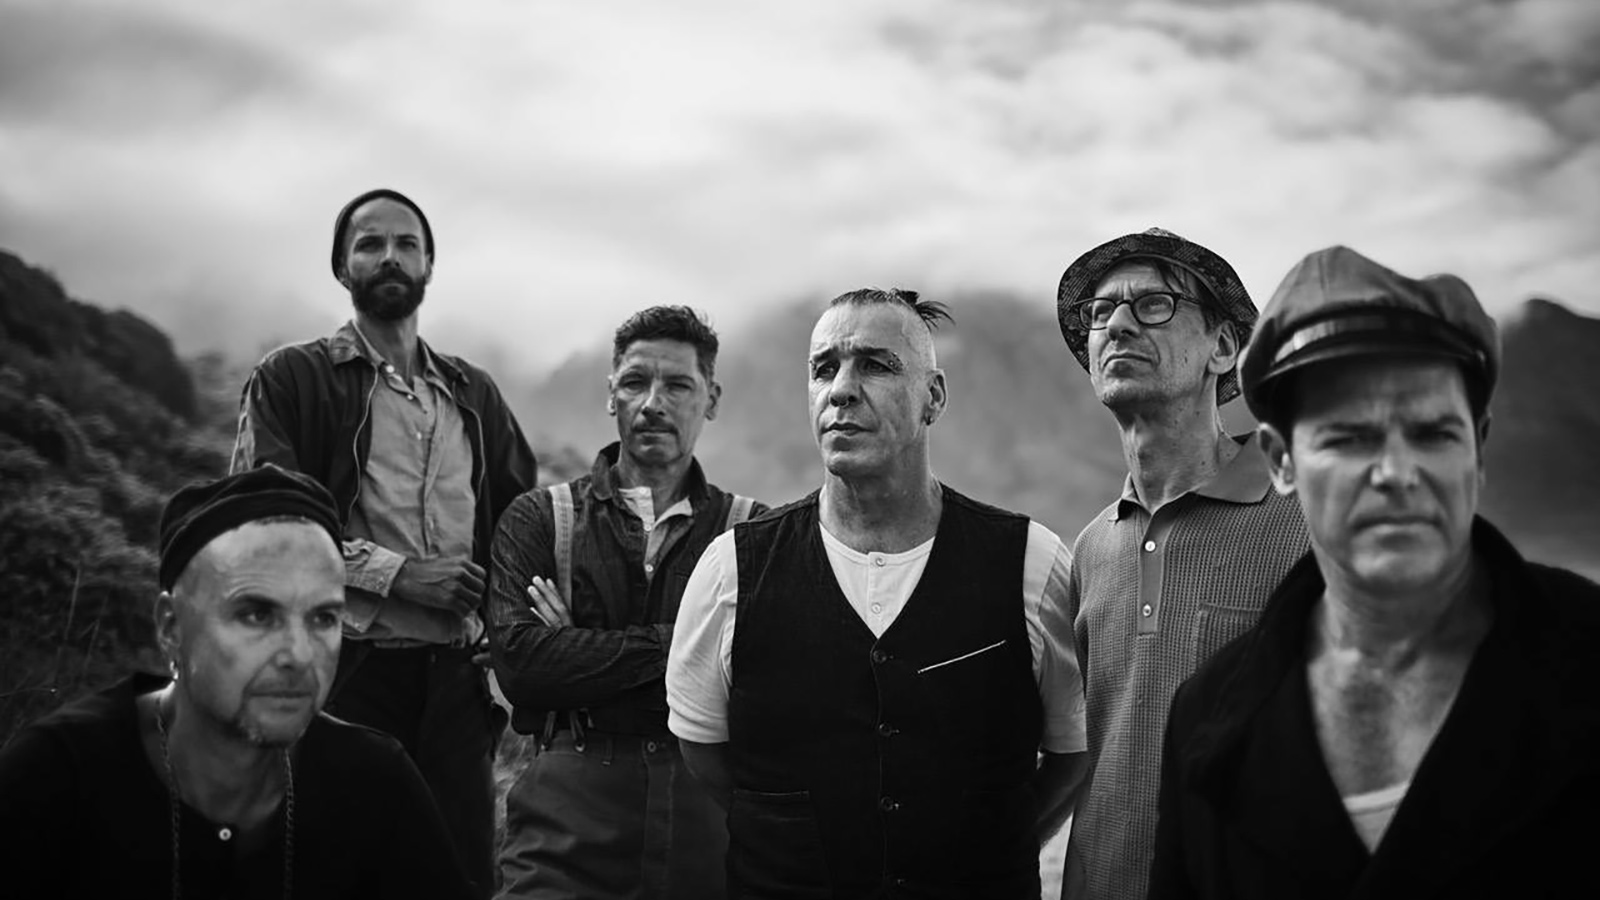 Rammstein Reveal New Album Release Date, Share "Deutschland" Single Art